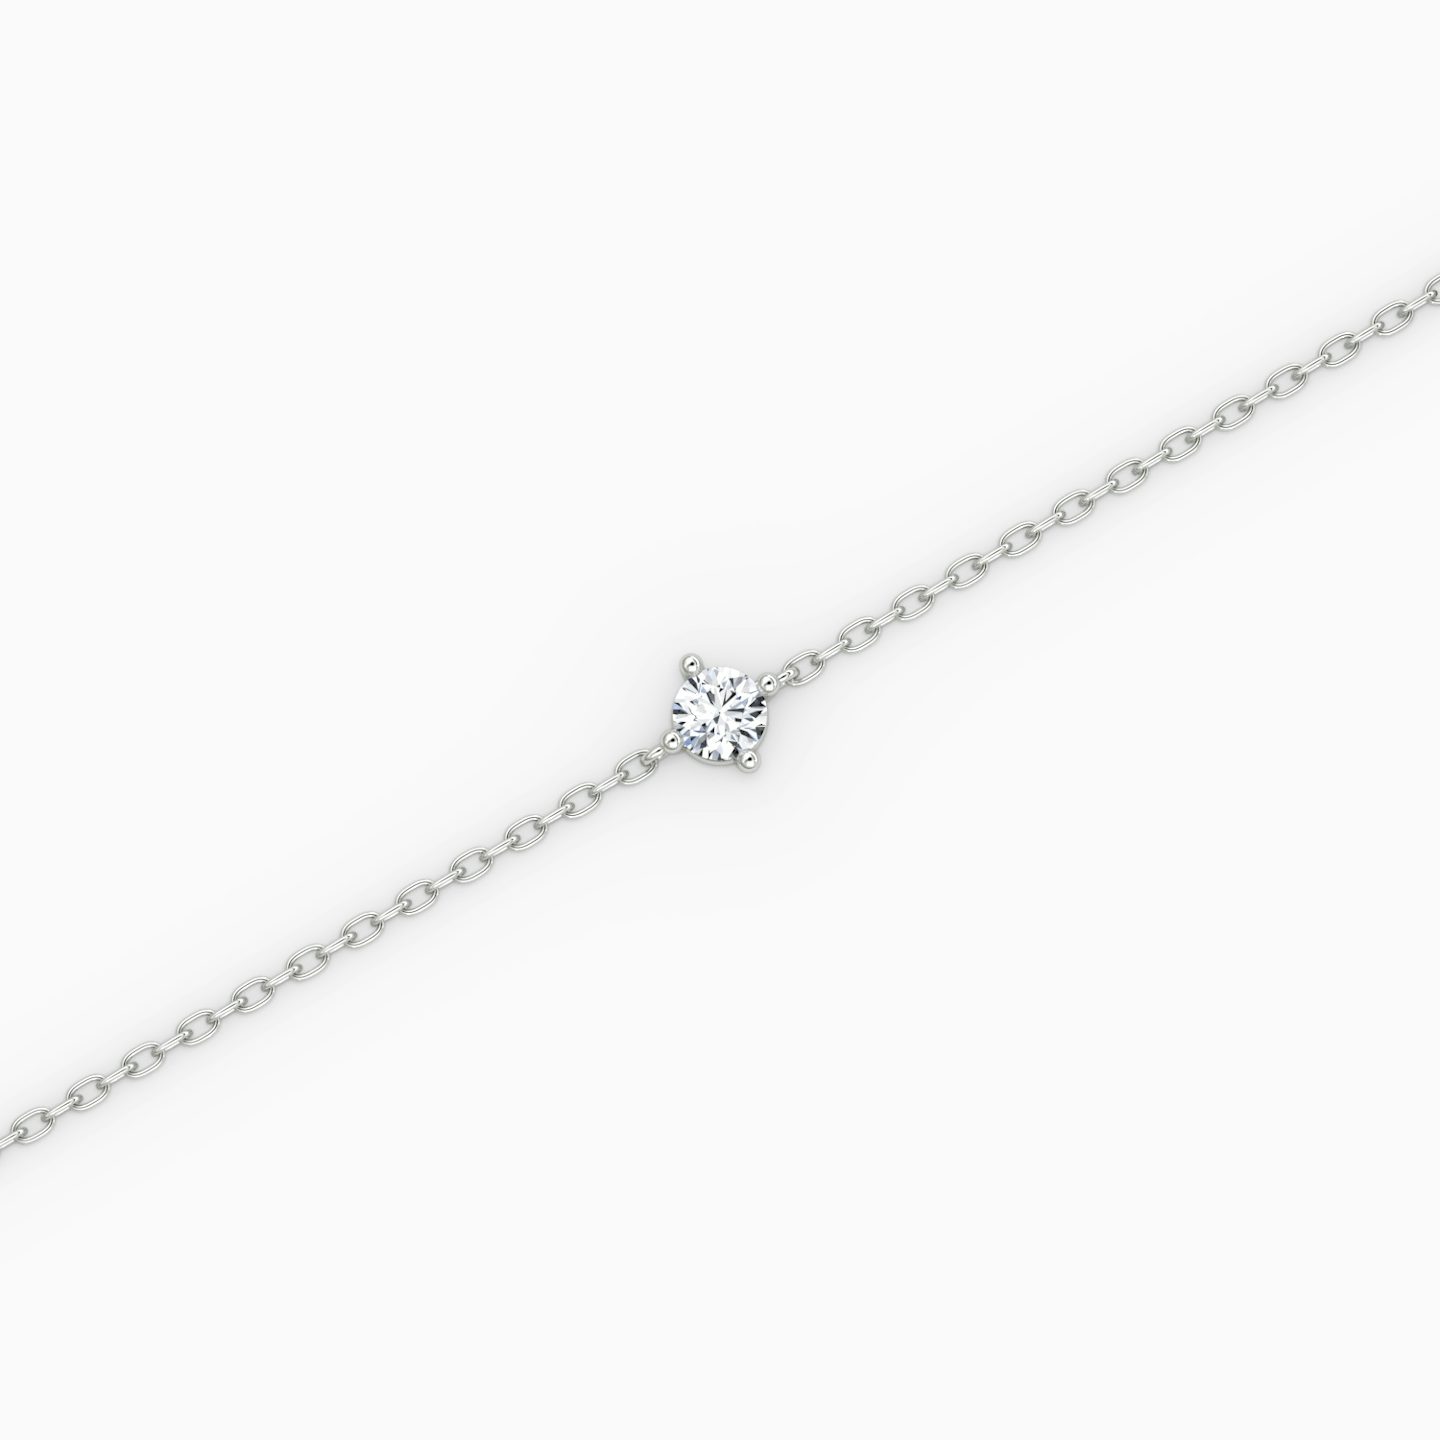 Petite Solitaire Bracelet | Round Brilliant | Sterling Silver | Chain length: 6.5-7